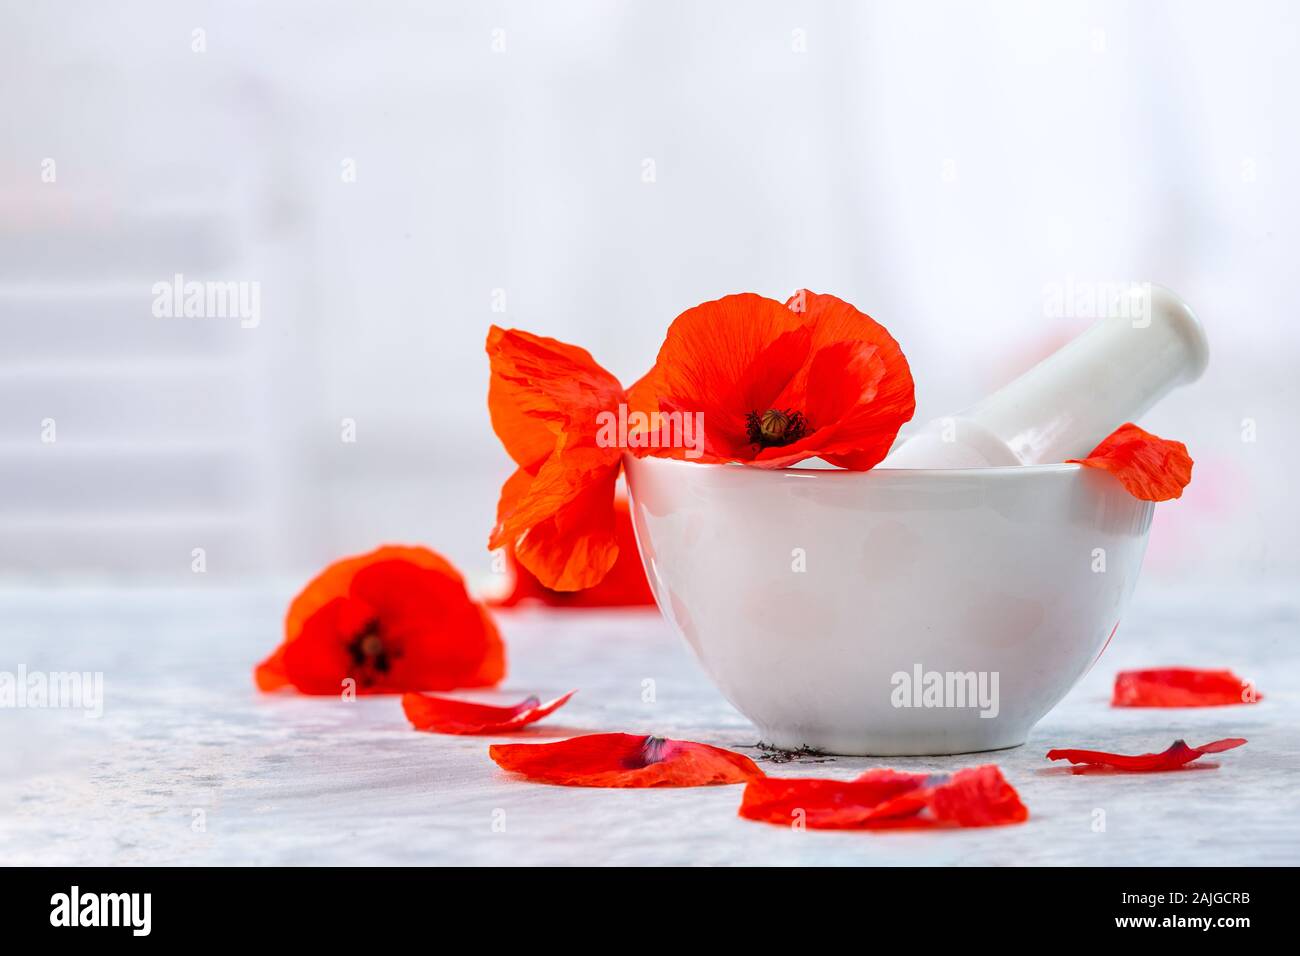 Ceramic, mortar and pestle alternative medicine poppies flowers vintage background Stock Photo